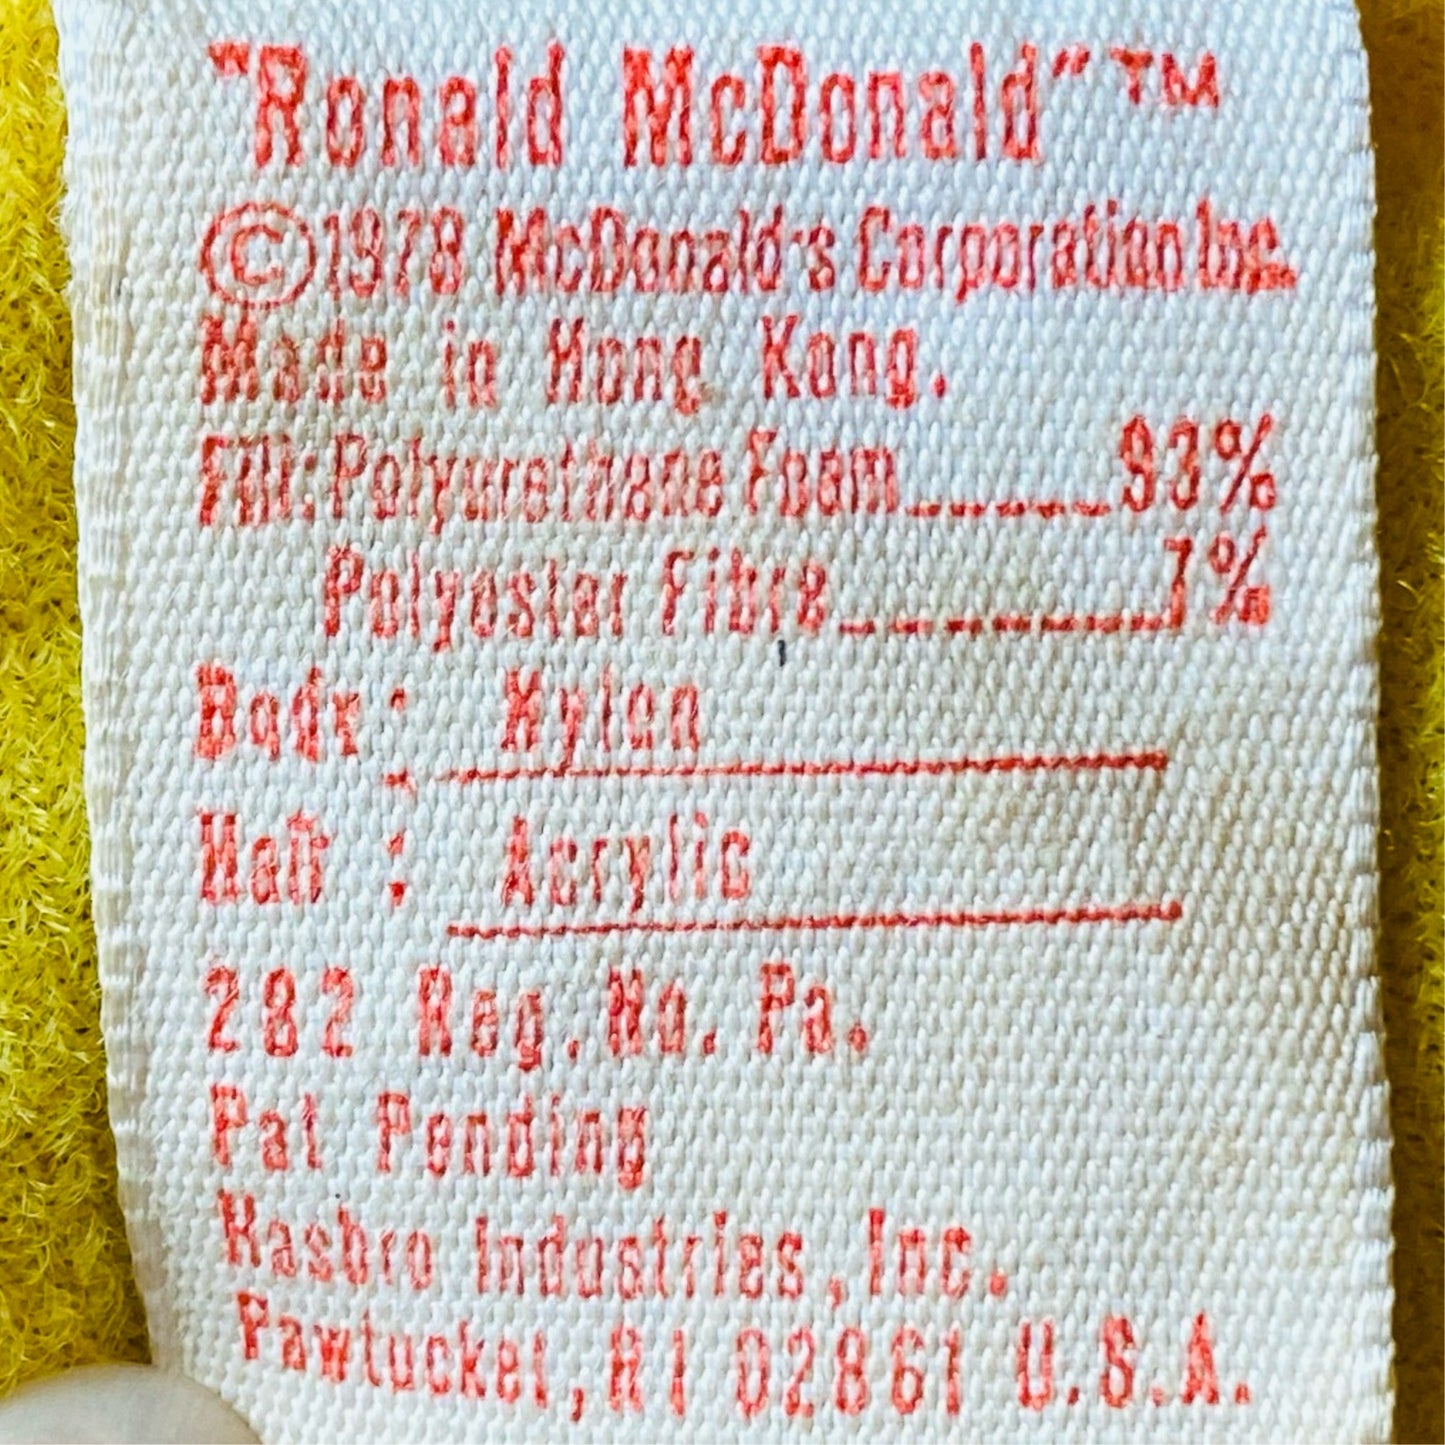 【1978 USA vintage】McDonald doll